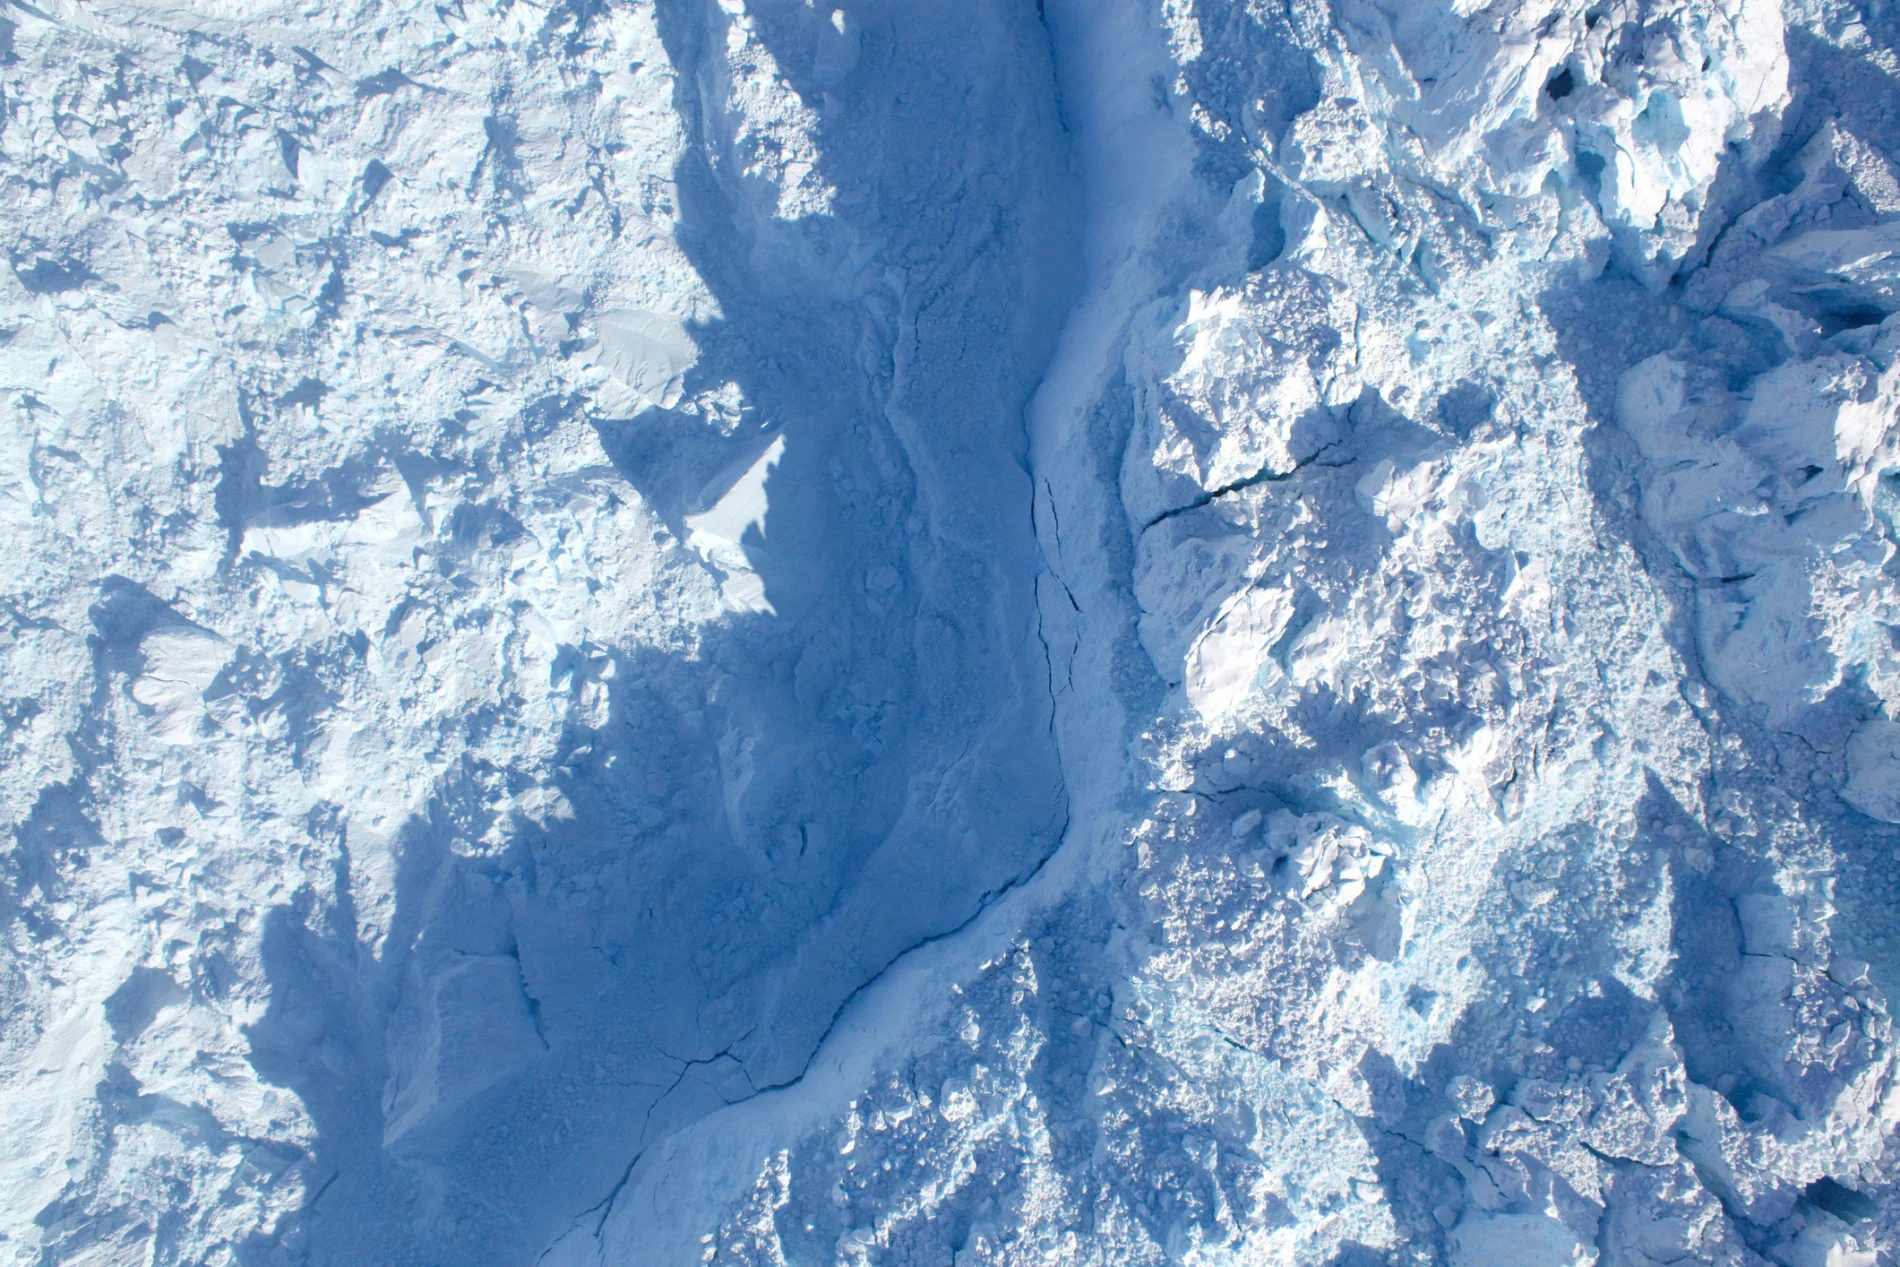 calving glacier in greenland Credit: Stocktrek Images. Getty Images